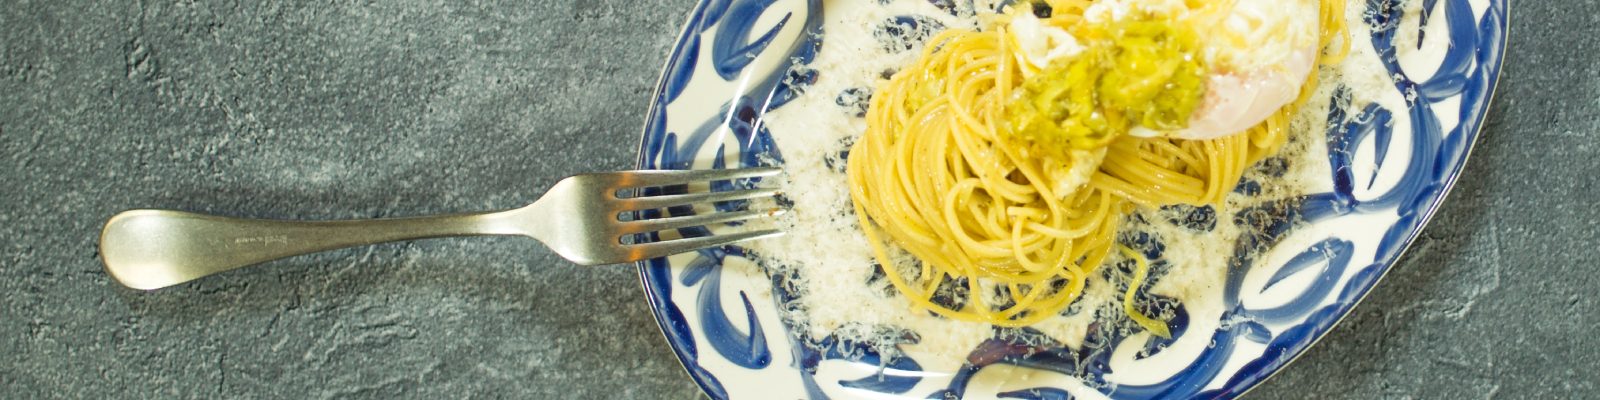 Pasta Garofalo - Spaghettini con salsa de puerro, azafrán y provolone